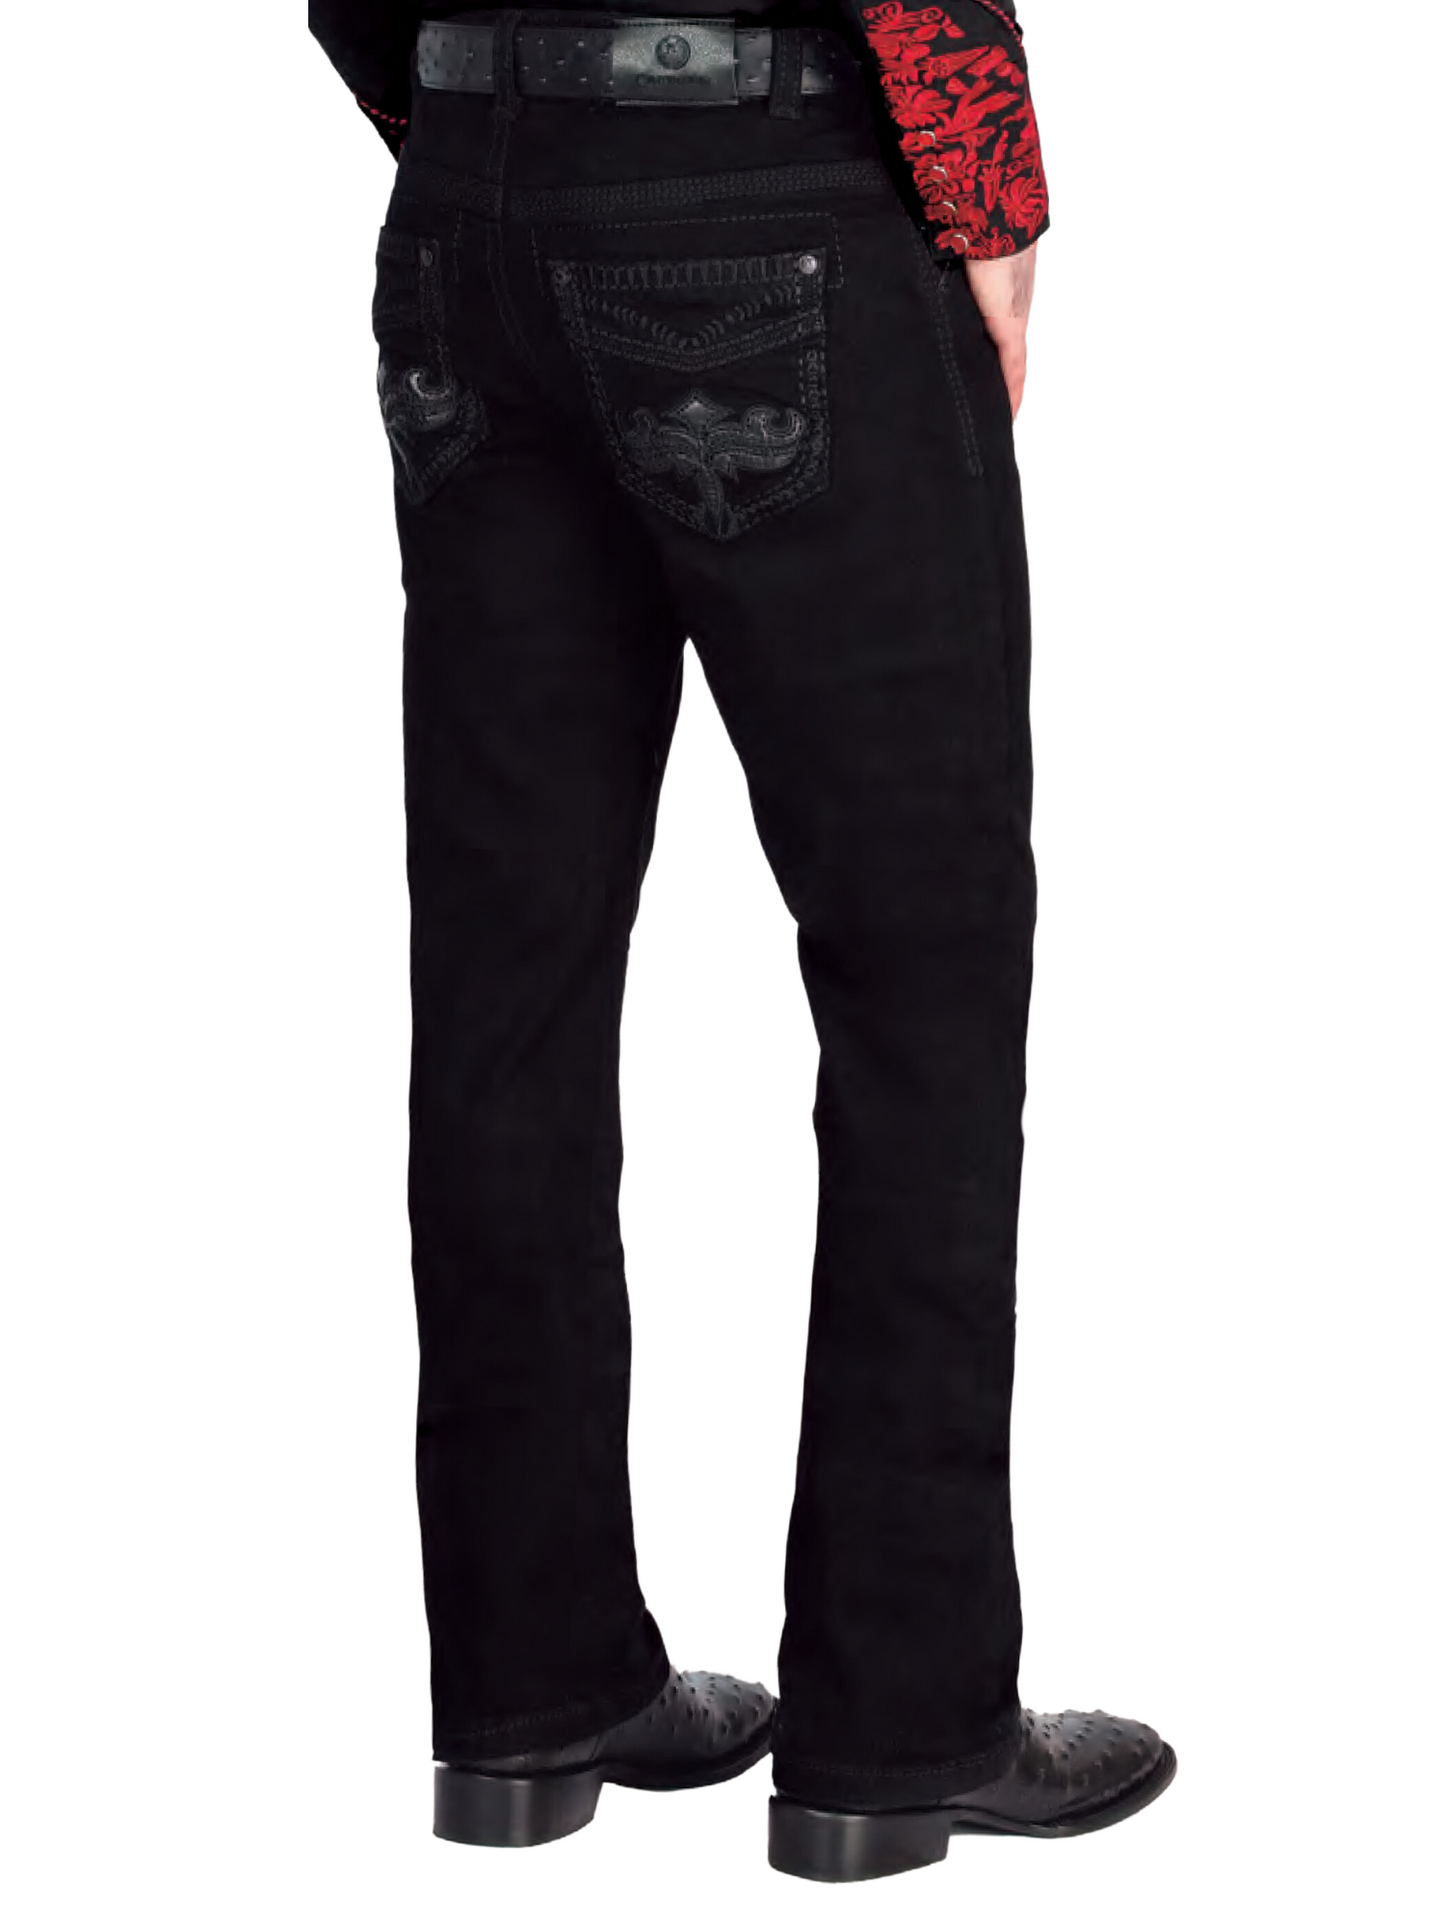 Pantalon Vaquero de Mezclilla Boot Cut Negro para Hombre 'Centenario' - ID: 44831 Denim Jeans Centenario 